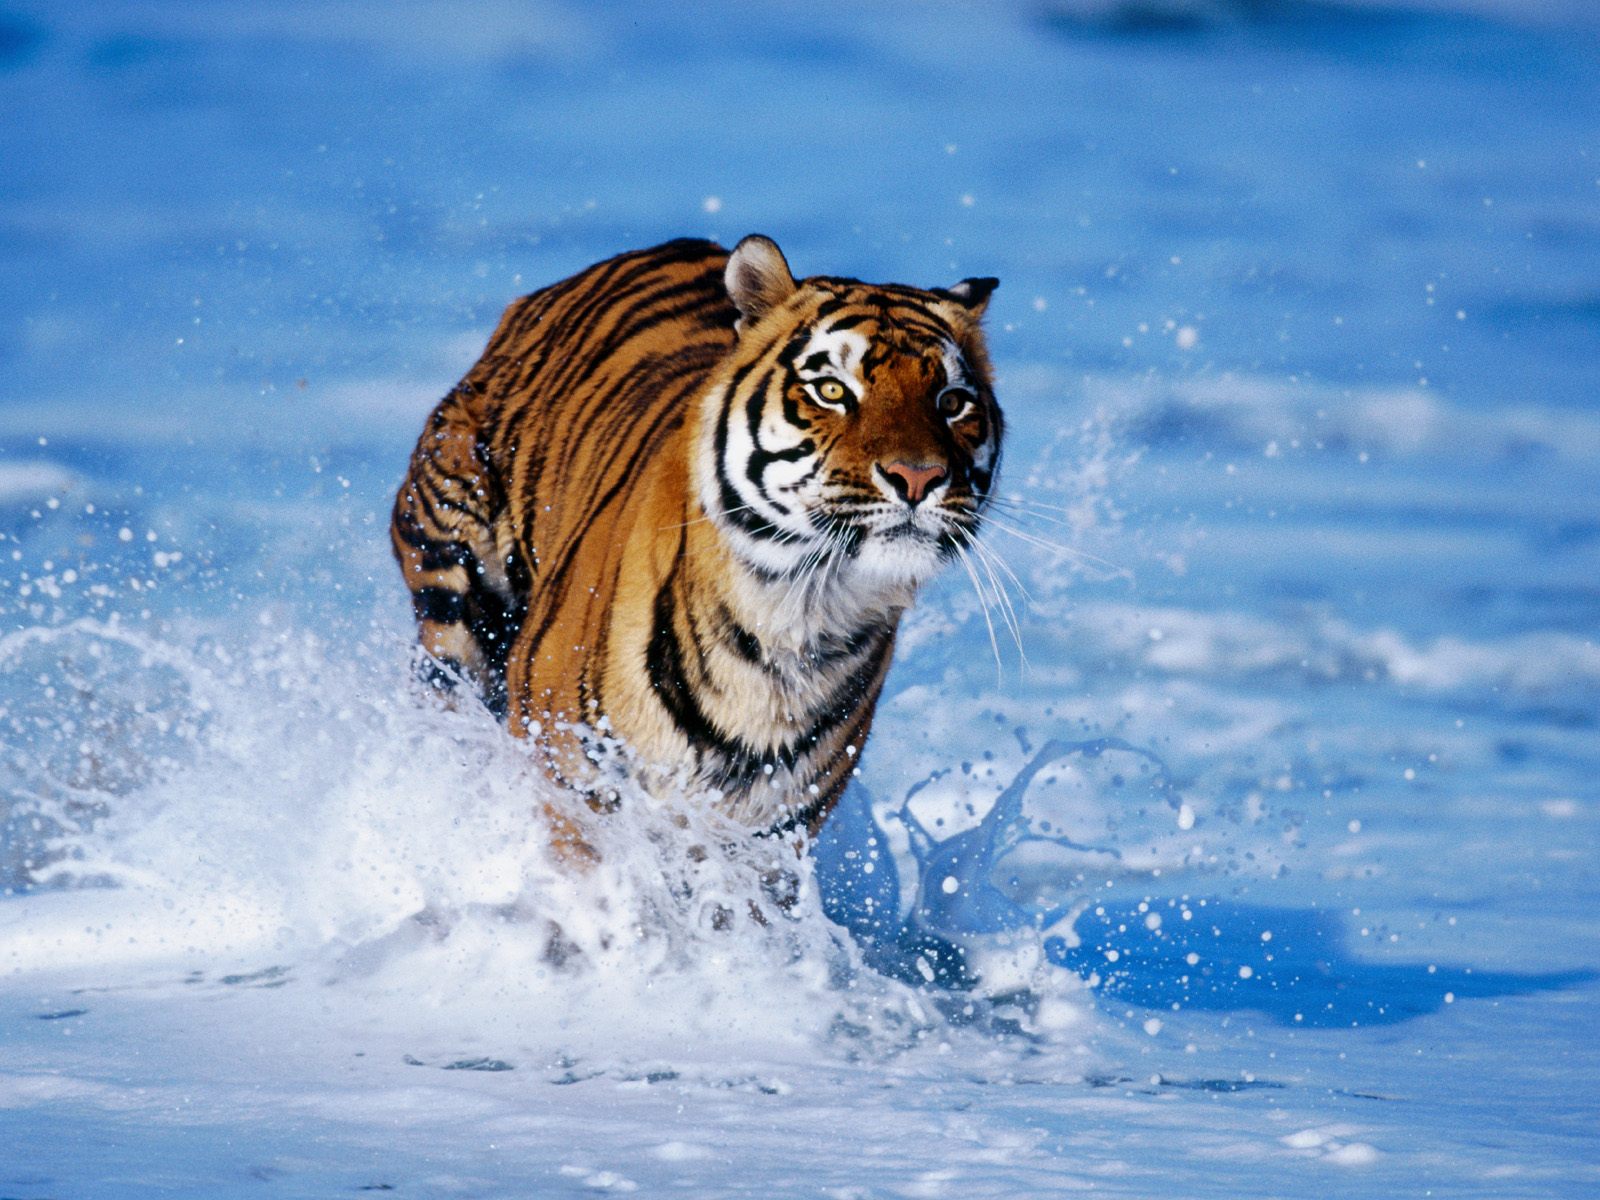 Tiger In Water Wallpaper HD